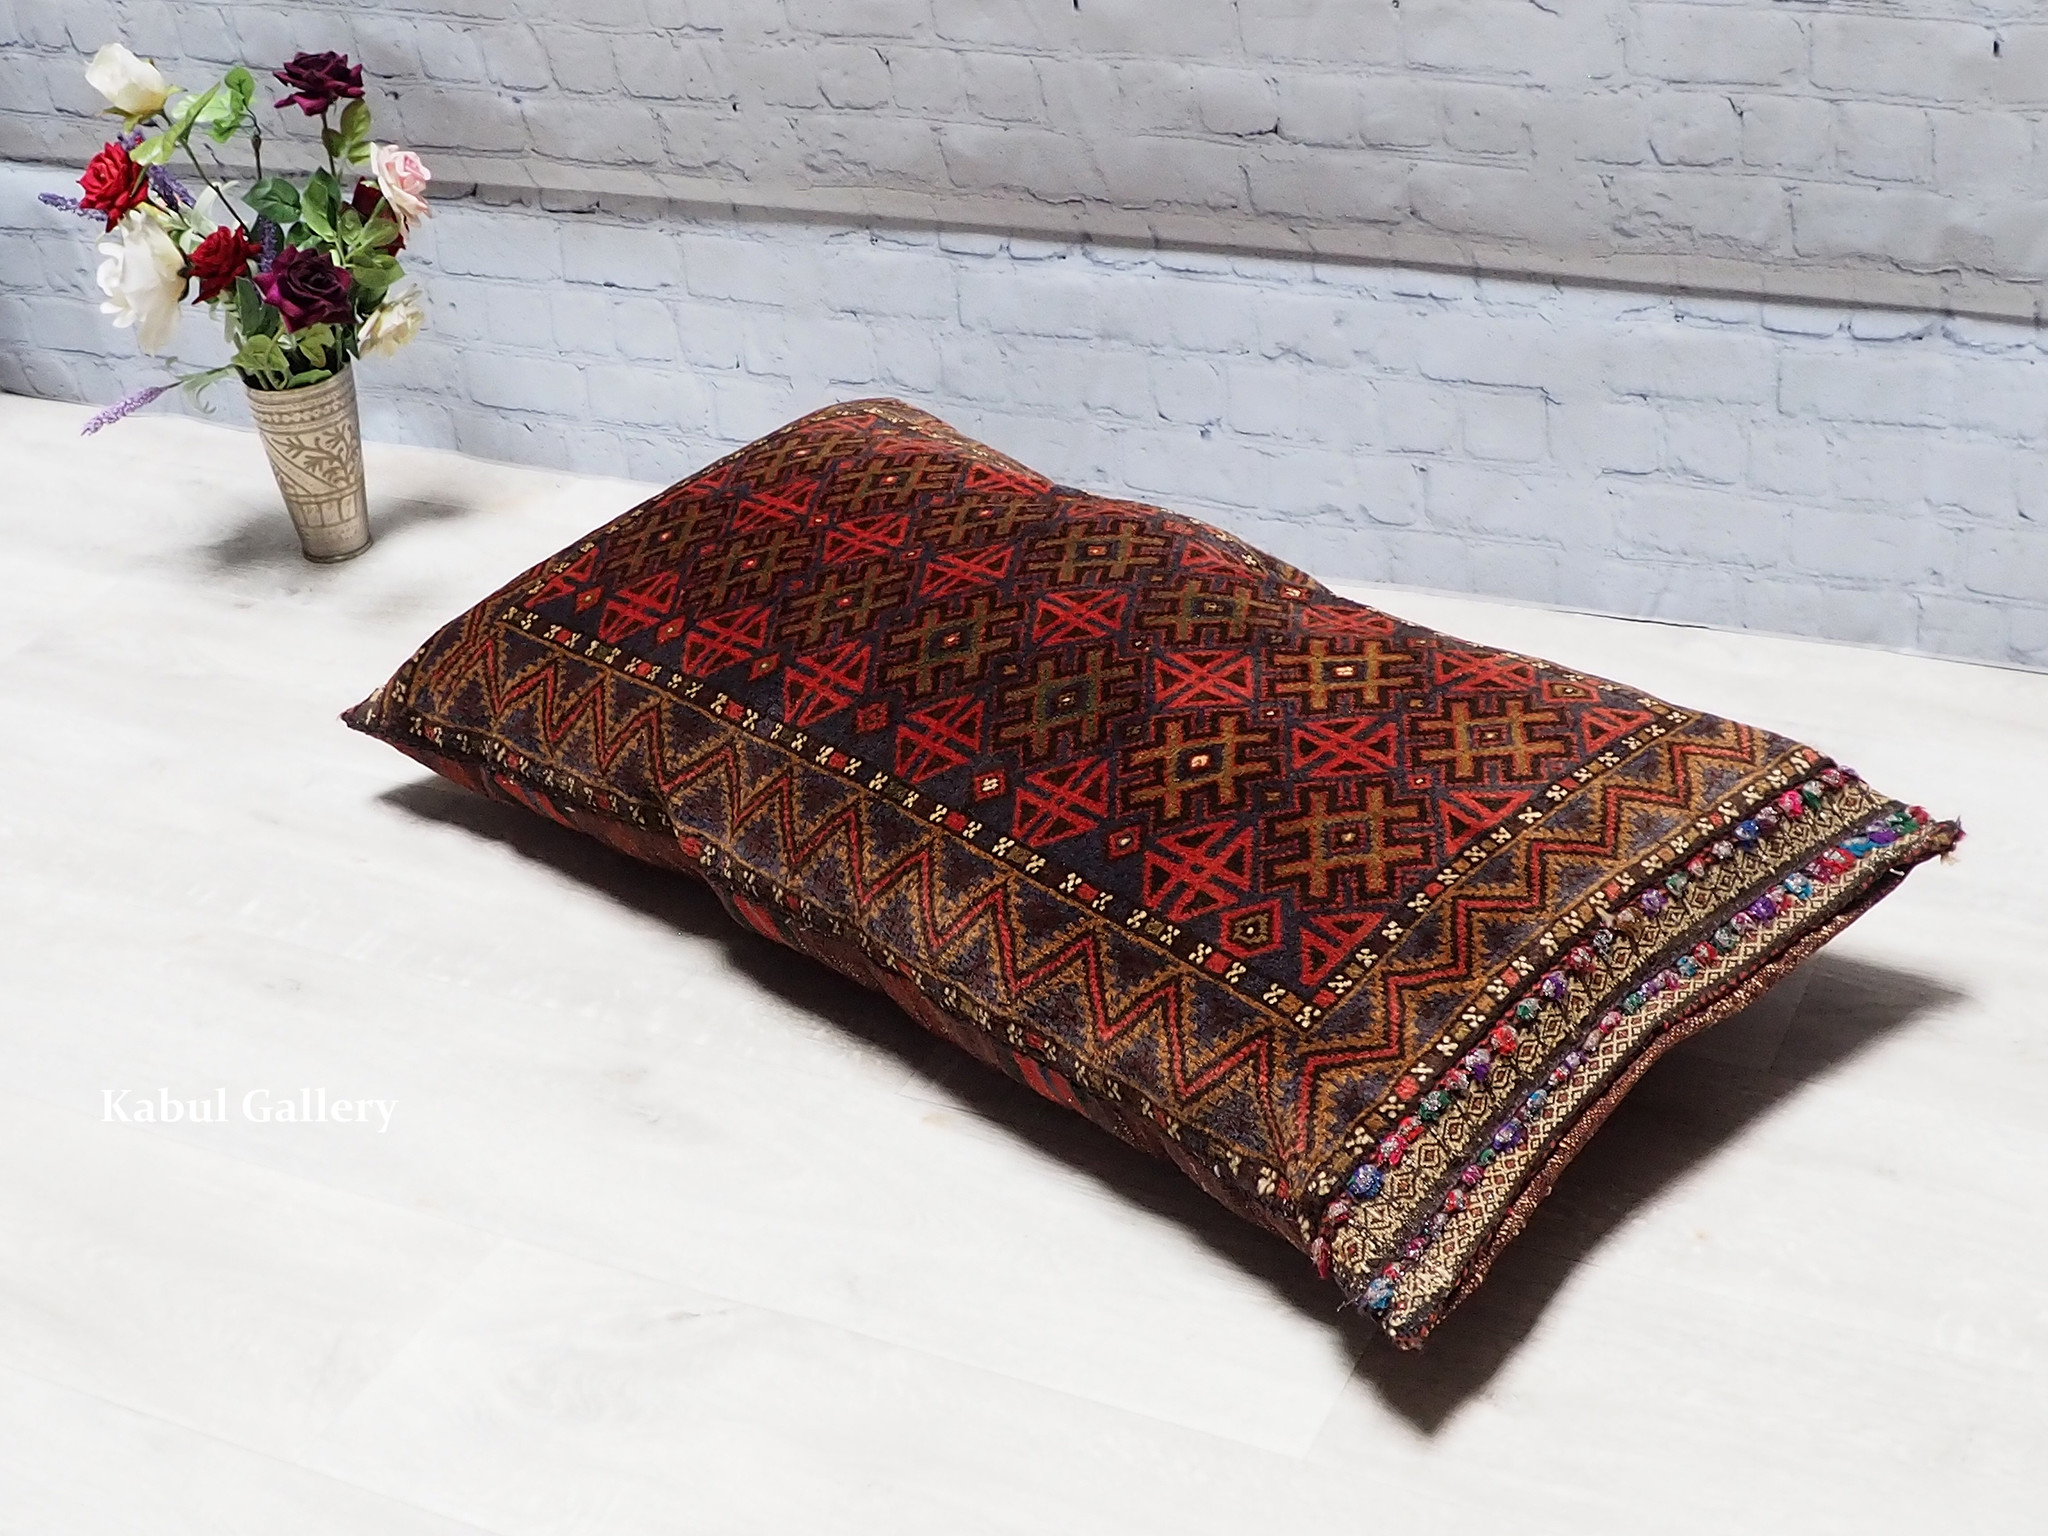 105x56 cm  (41,3" x 22" inch) antique orient Afghan Beloch nomad rug seat floor cushion Bohemian pillow 1001 night  No:22/7